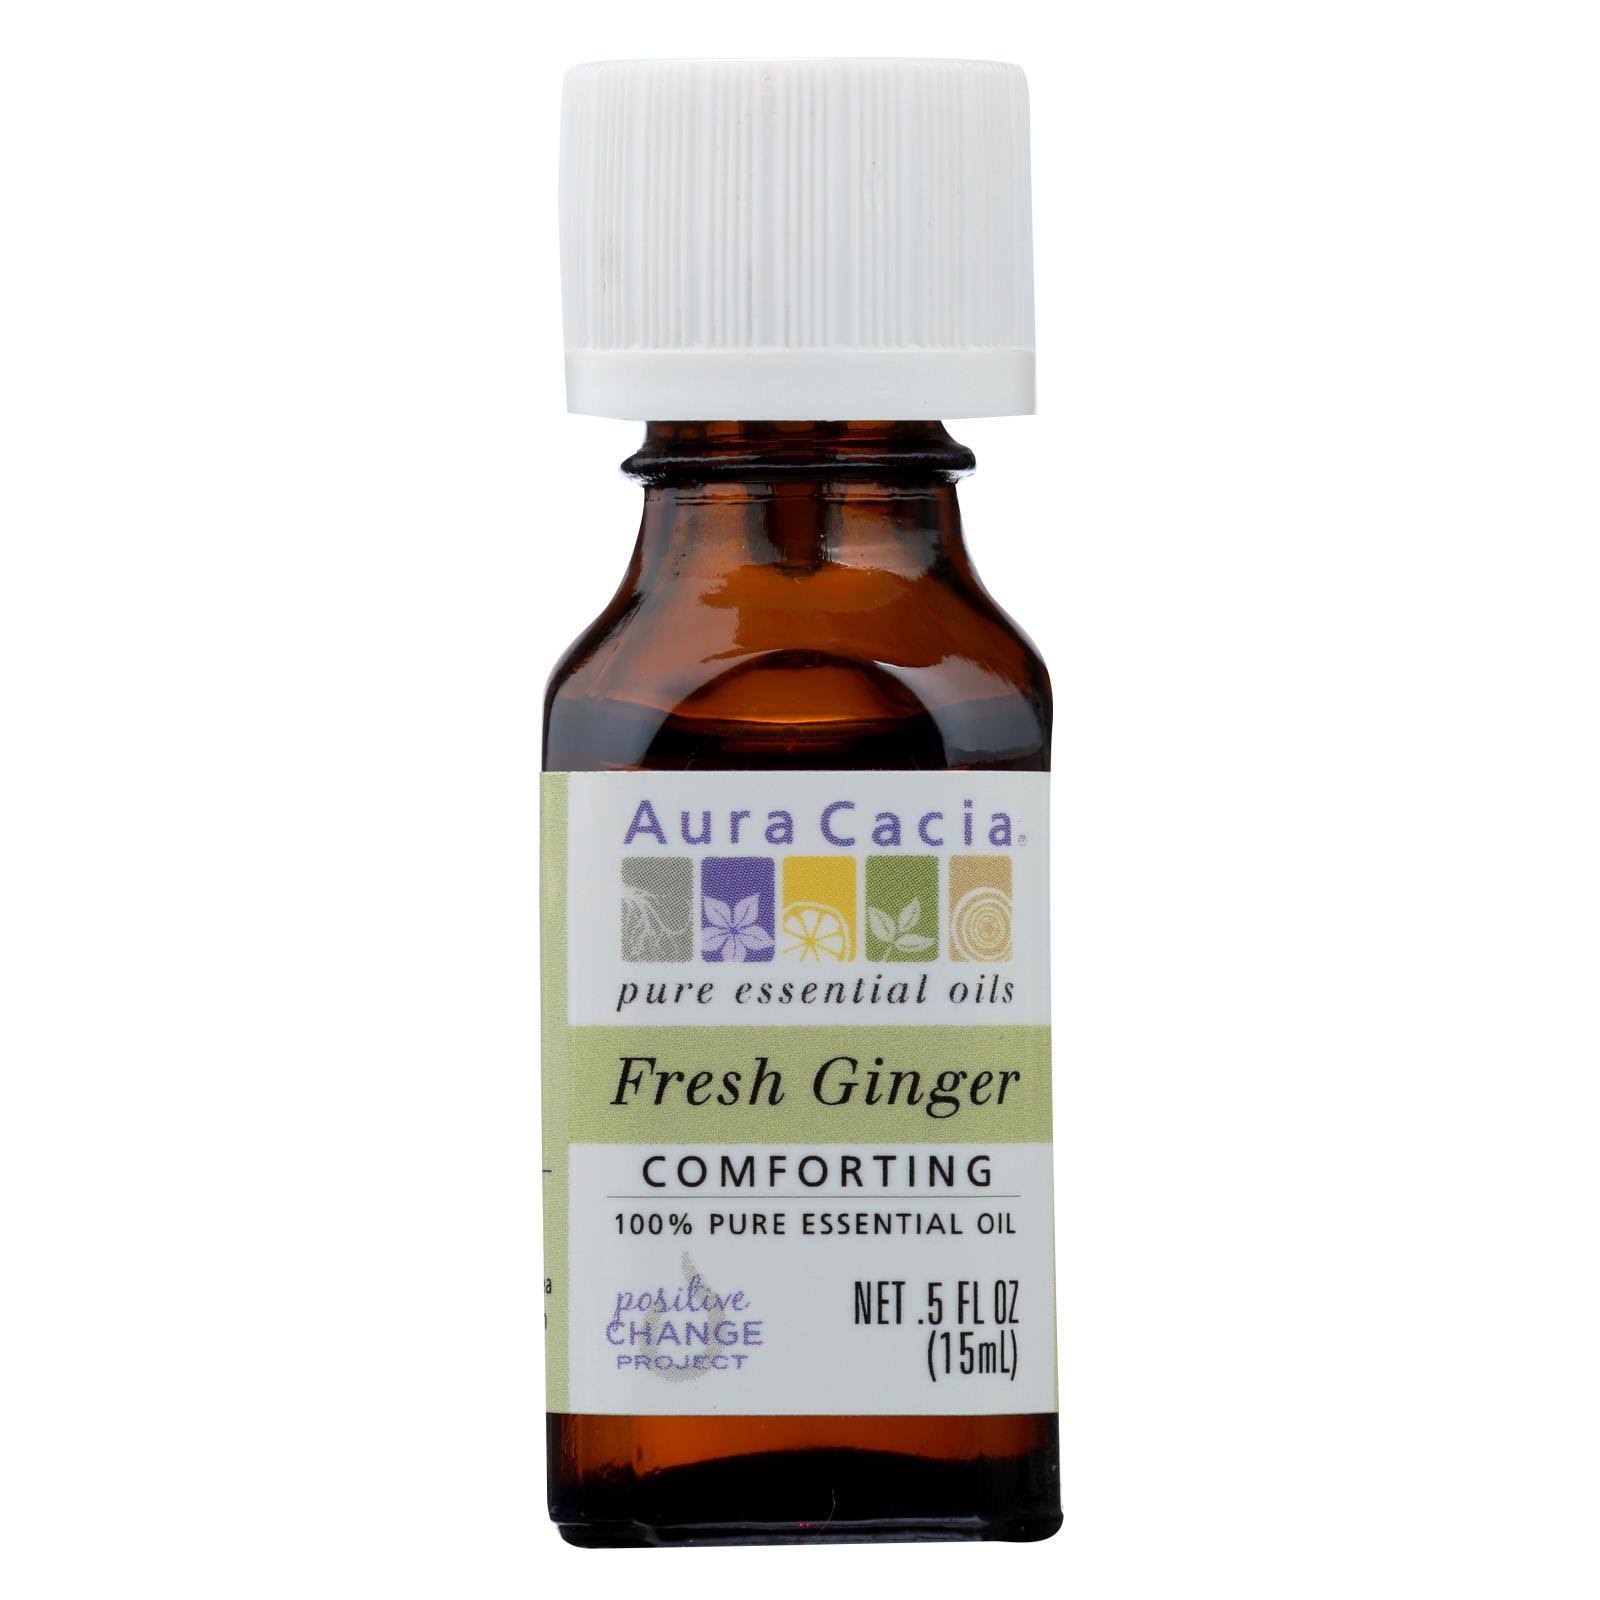 Aura Cacia 100% Pure Essential Oil - Ginger, 15ml